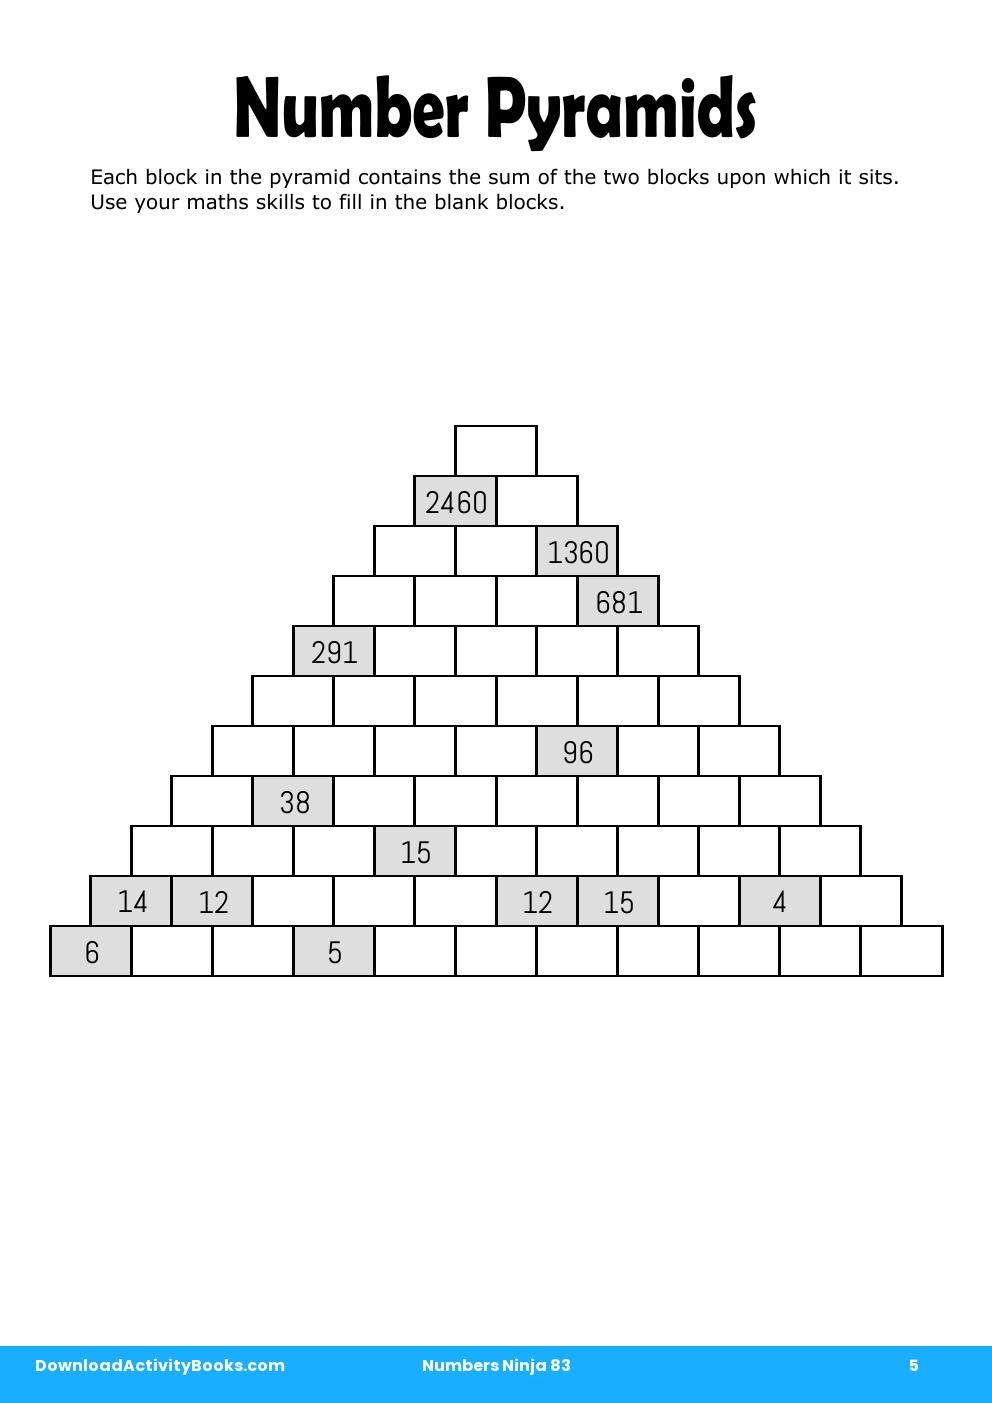 Number Pyramids in Numbers Ninja 83